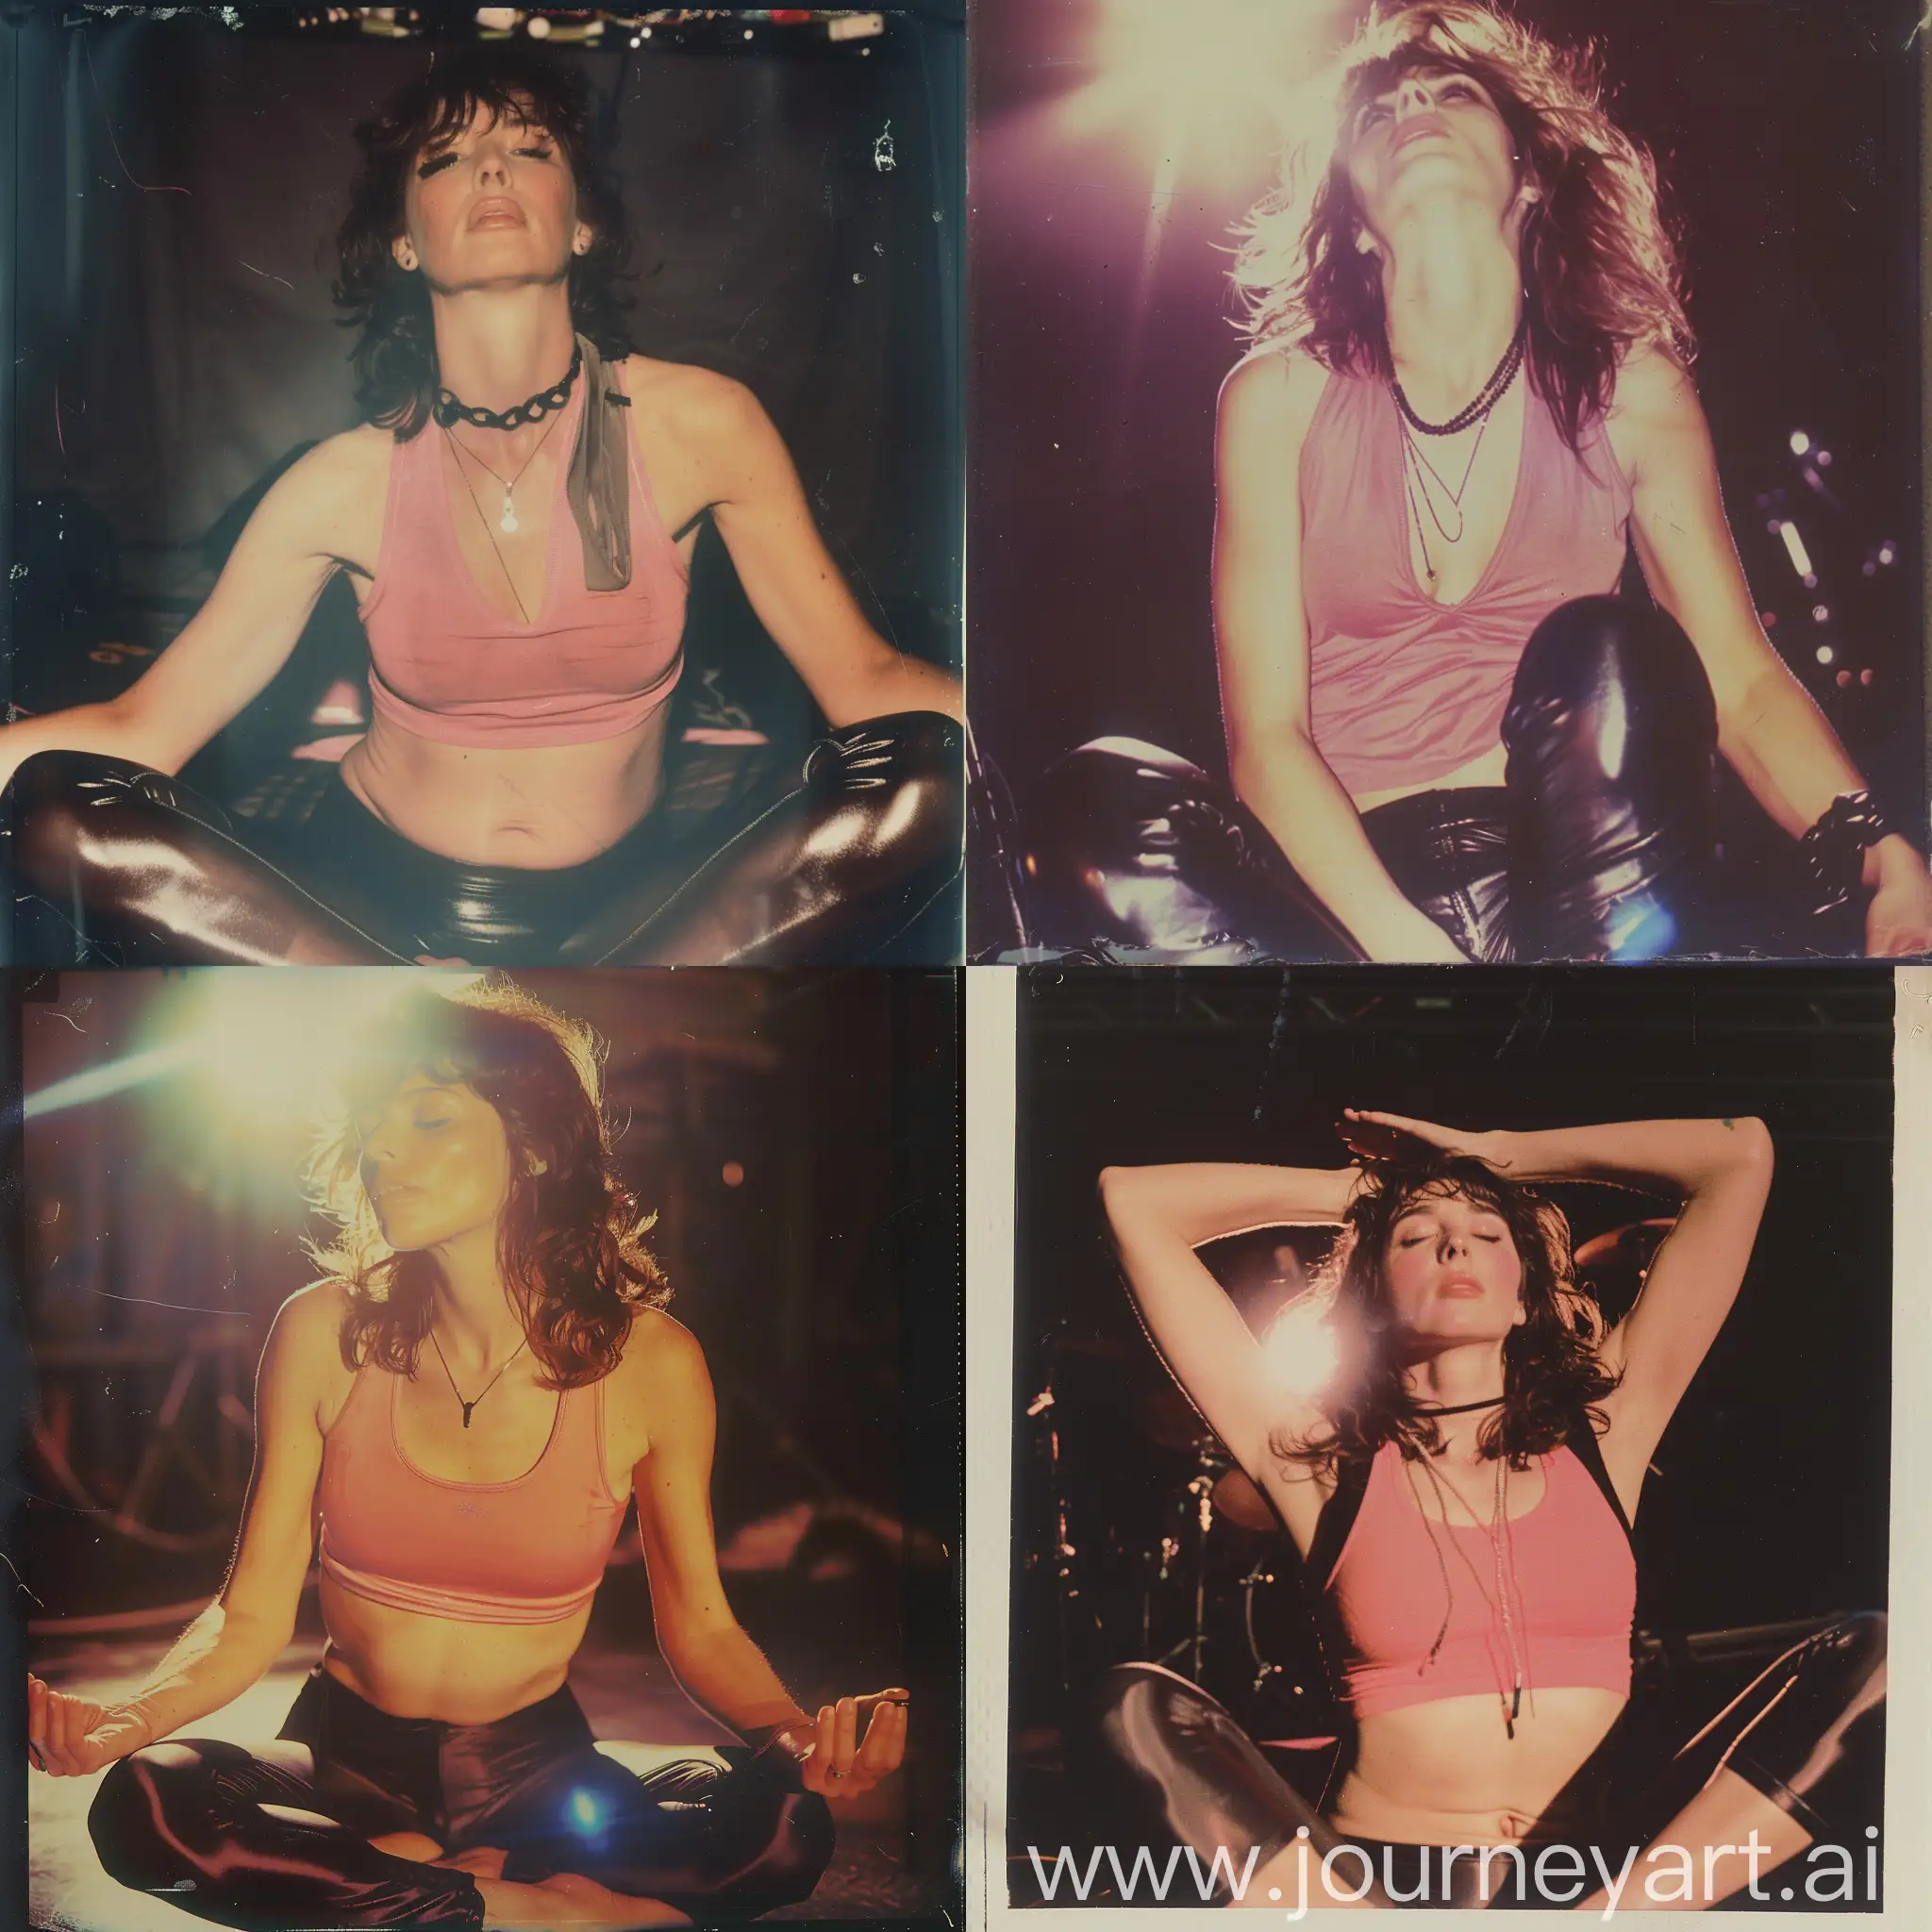 Laura-Branigan-Performing-Yoga-On-Stage-in-1983-Vintage-Instant-Polaroid-Photo